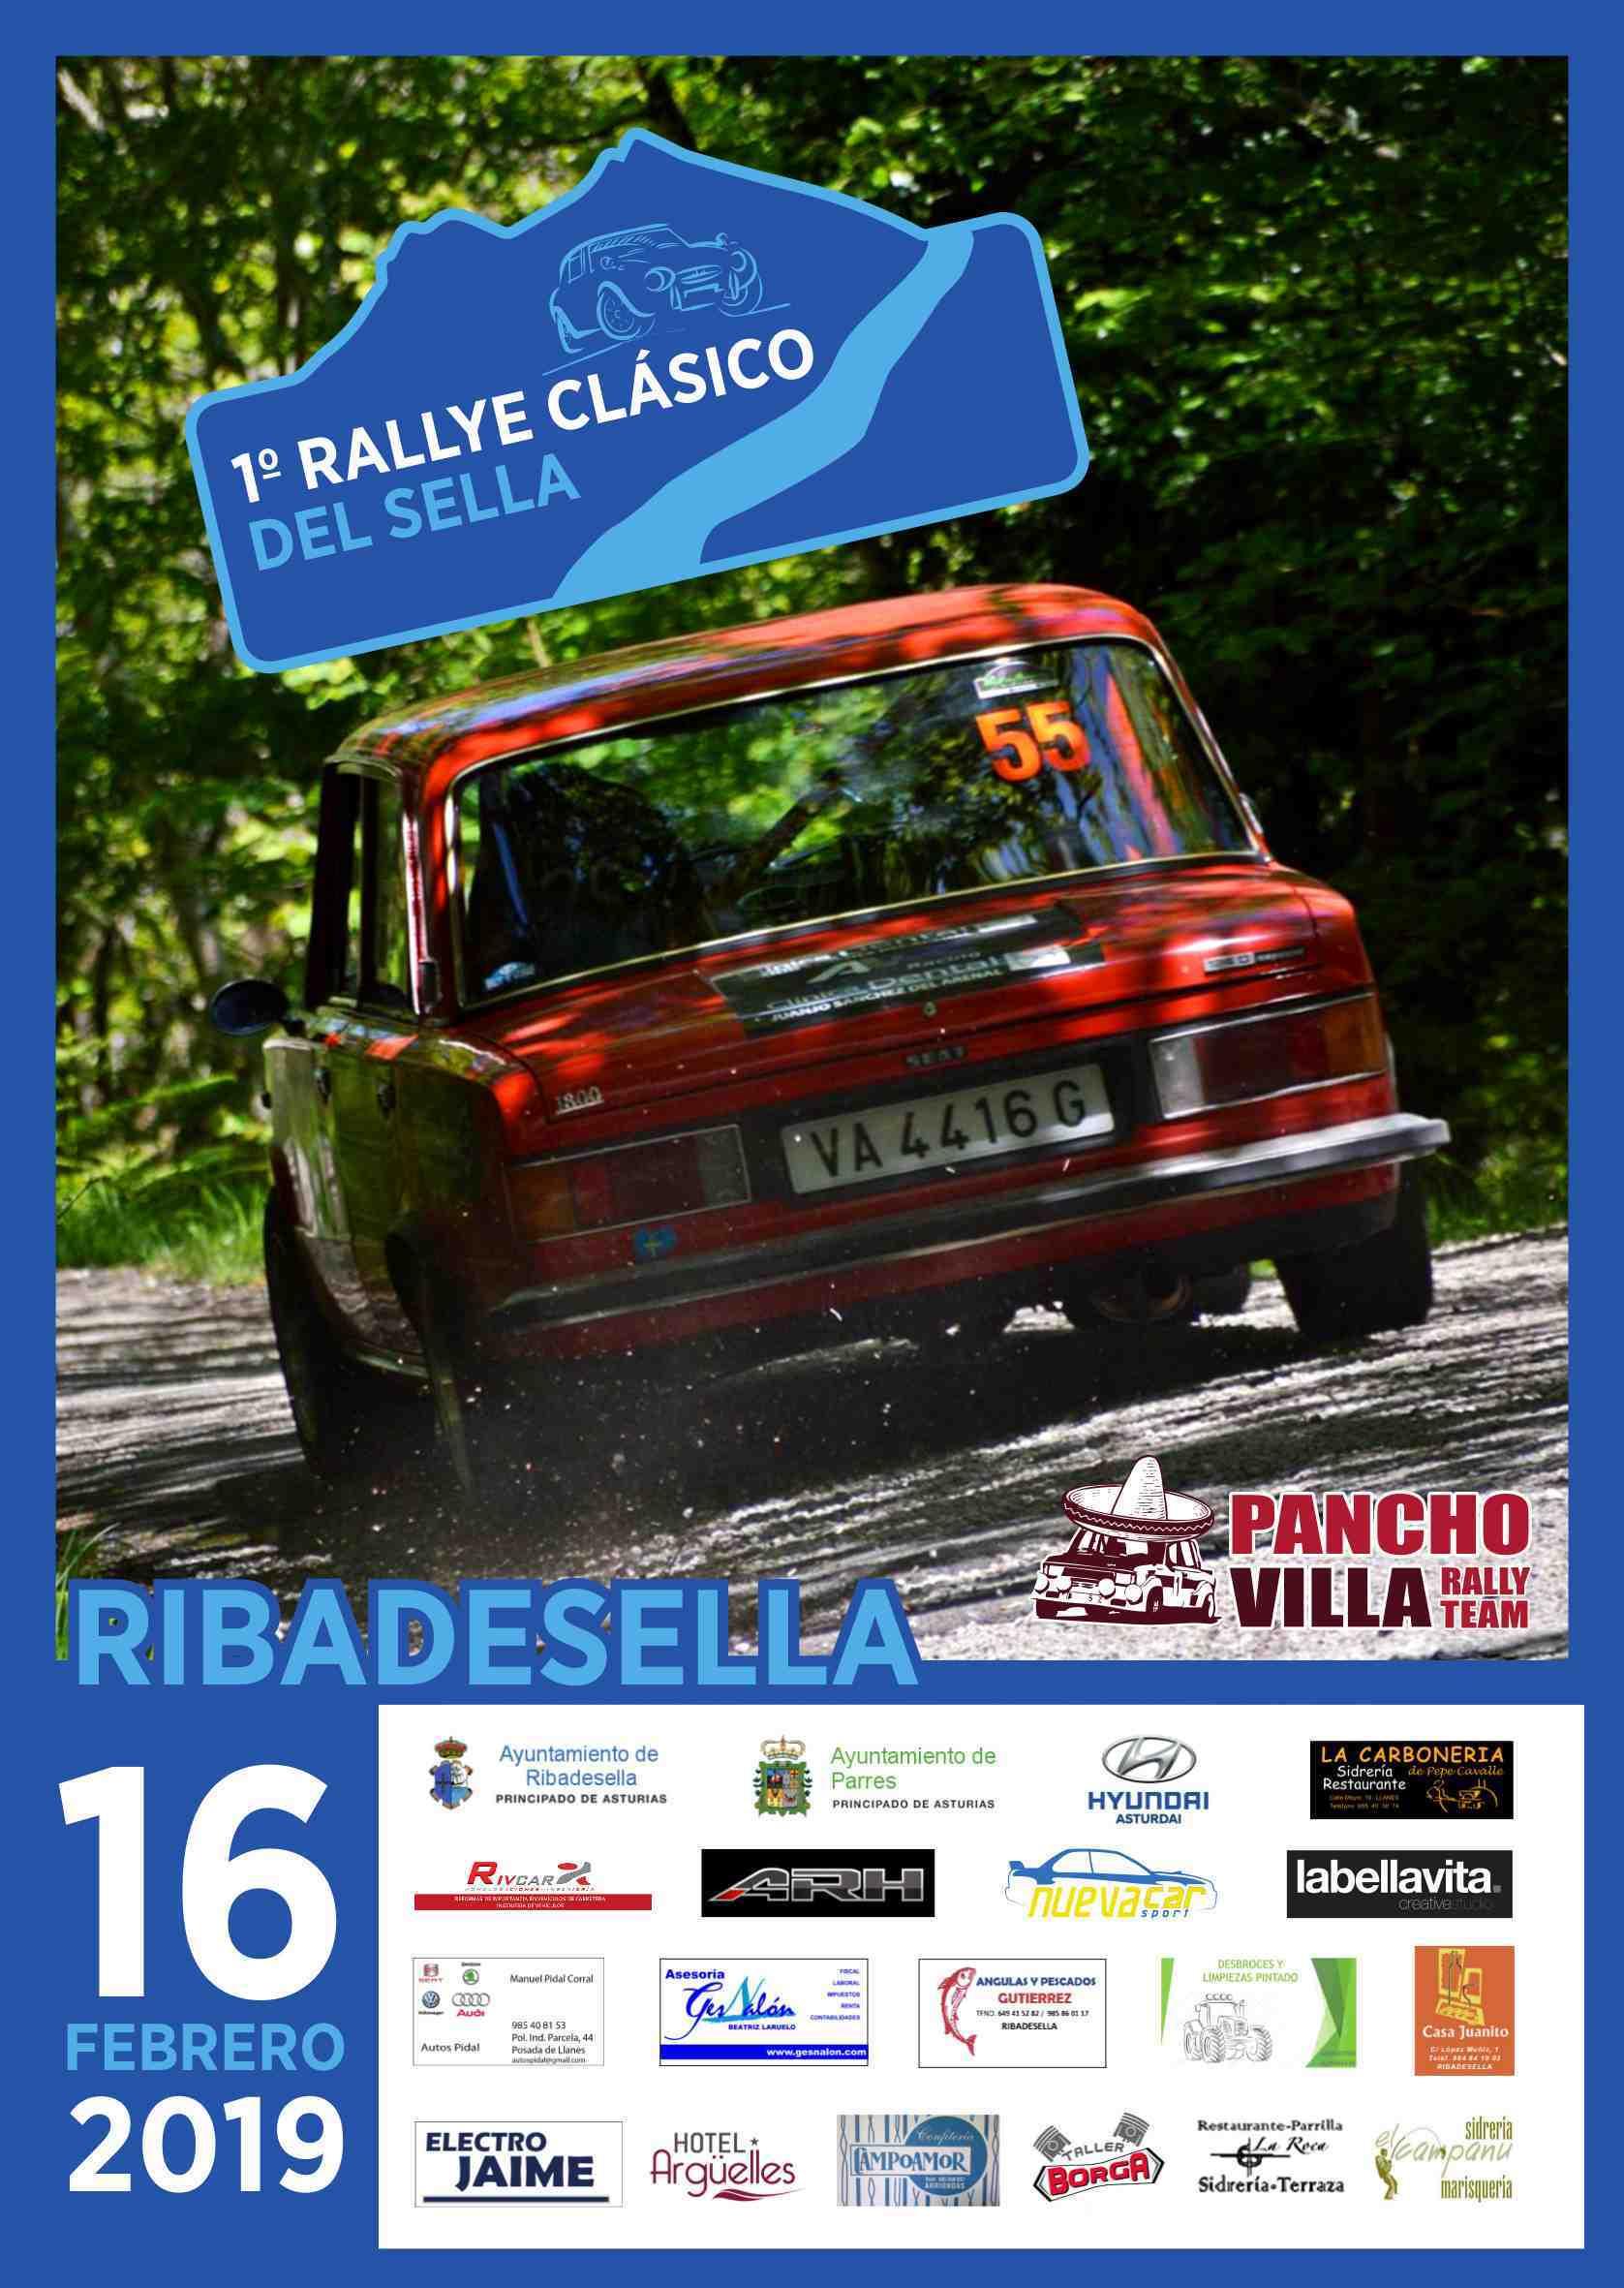 2019.02.16.rallye_clasico_sella.jpg